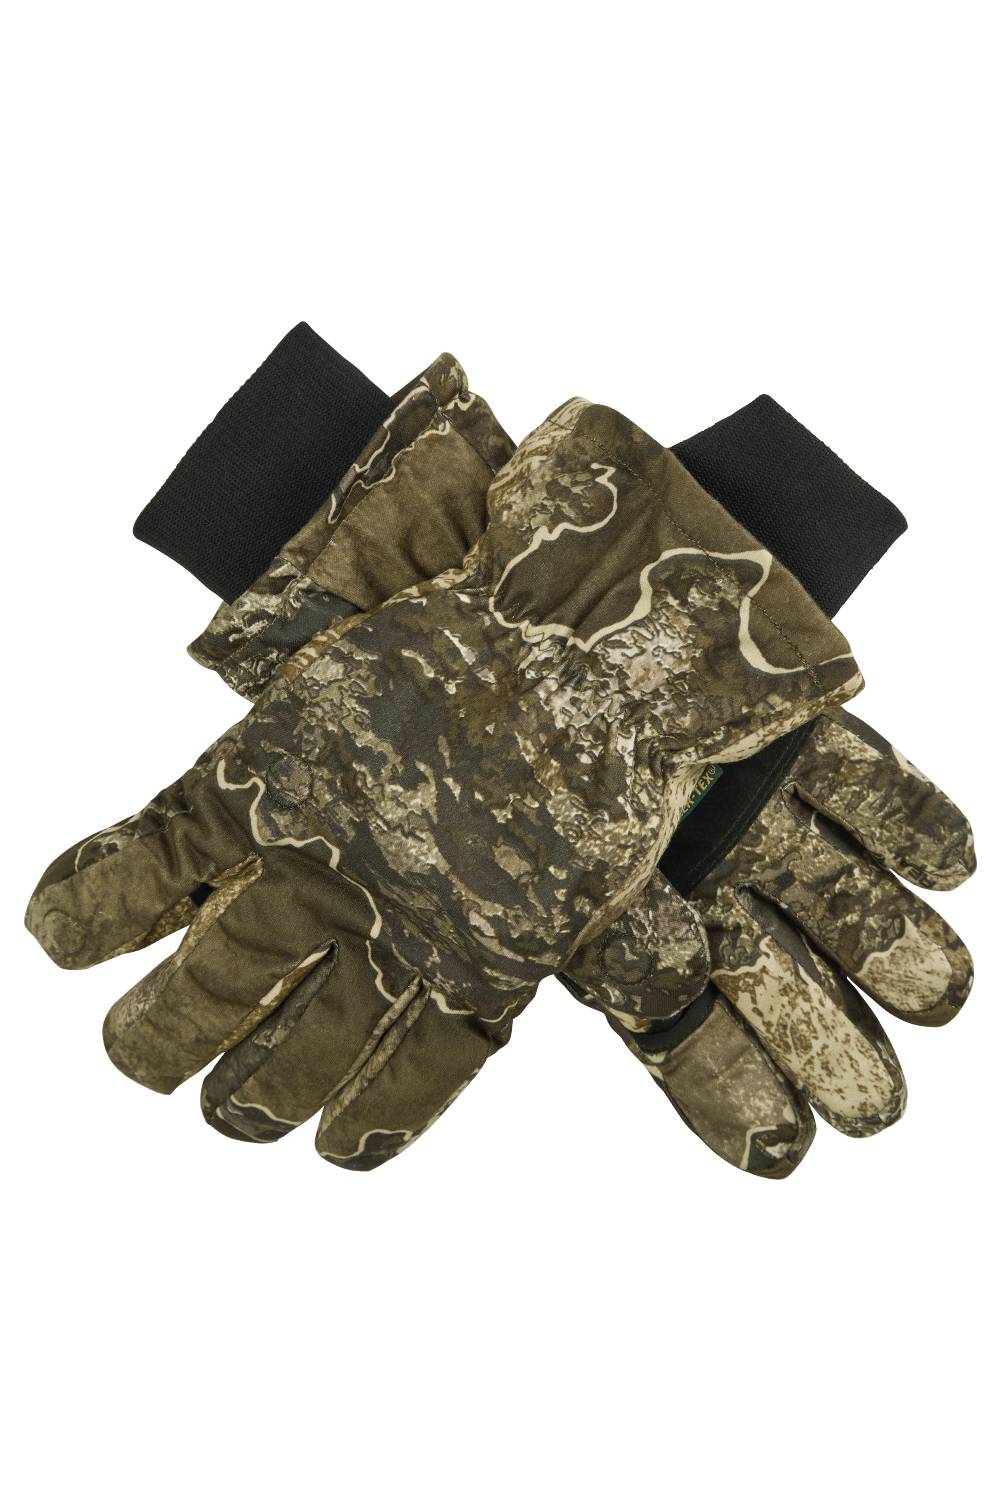 Deerhunter Excape Winter Gloves in Realtree Excape 